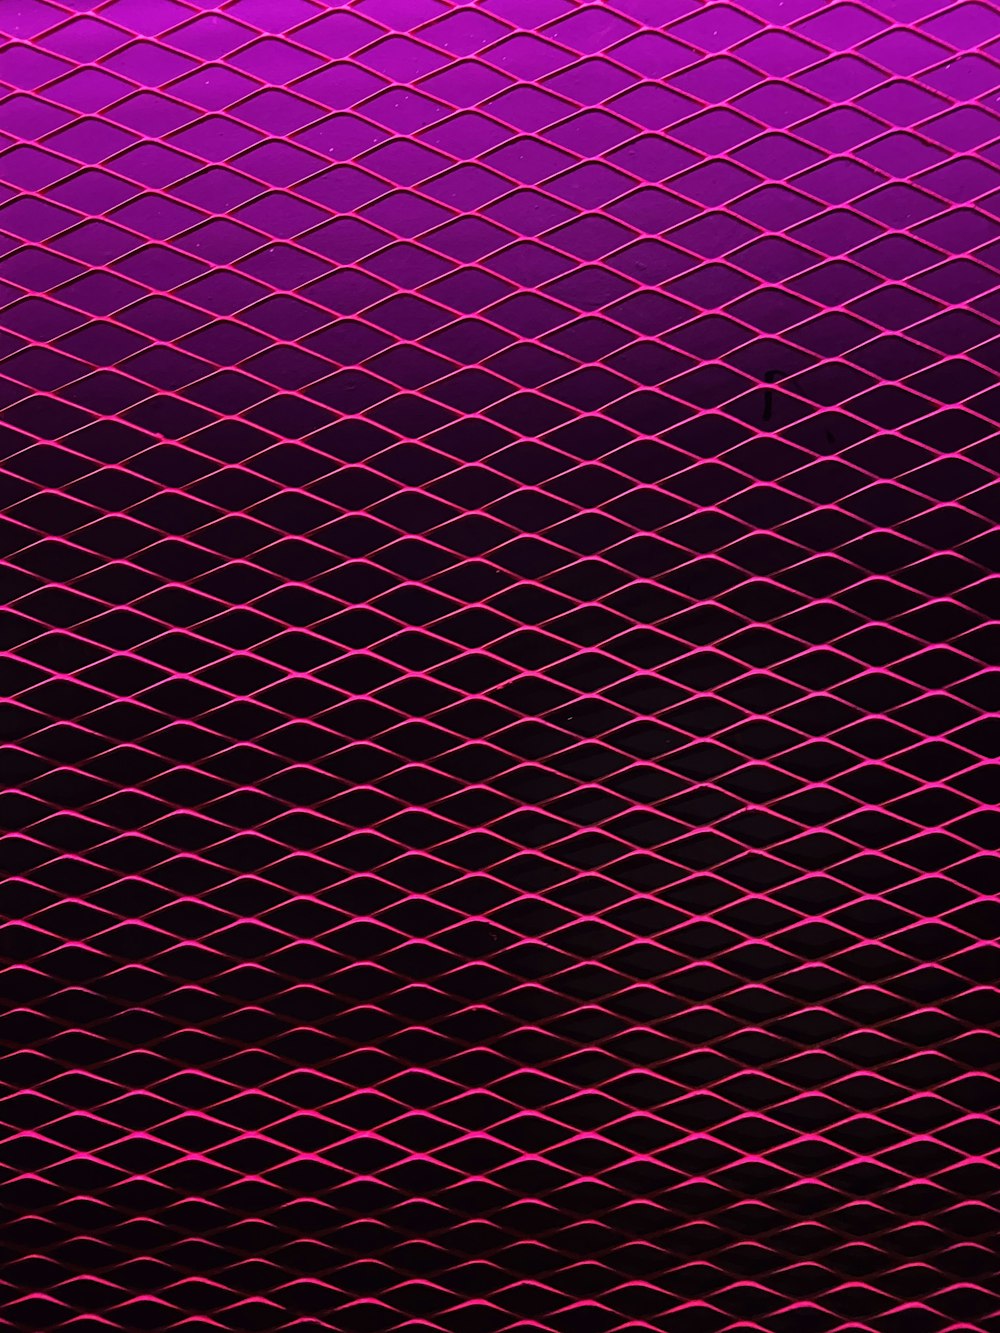 purple and pink polka dot textile